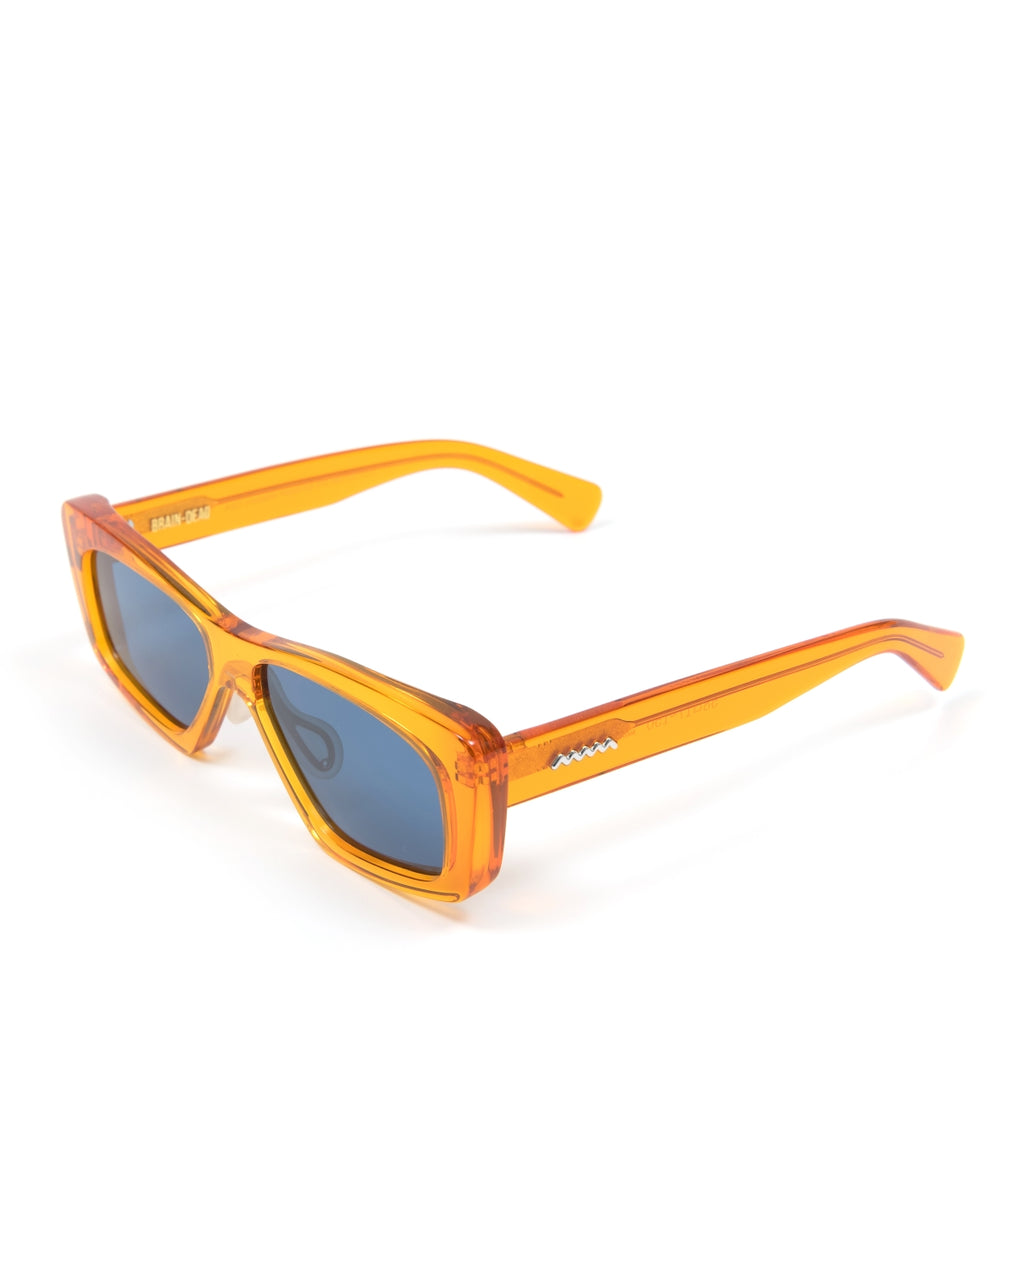 Kopelman Post Modern Primitive Eye Protection - Orange/Blue 3